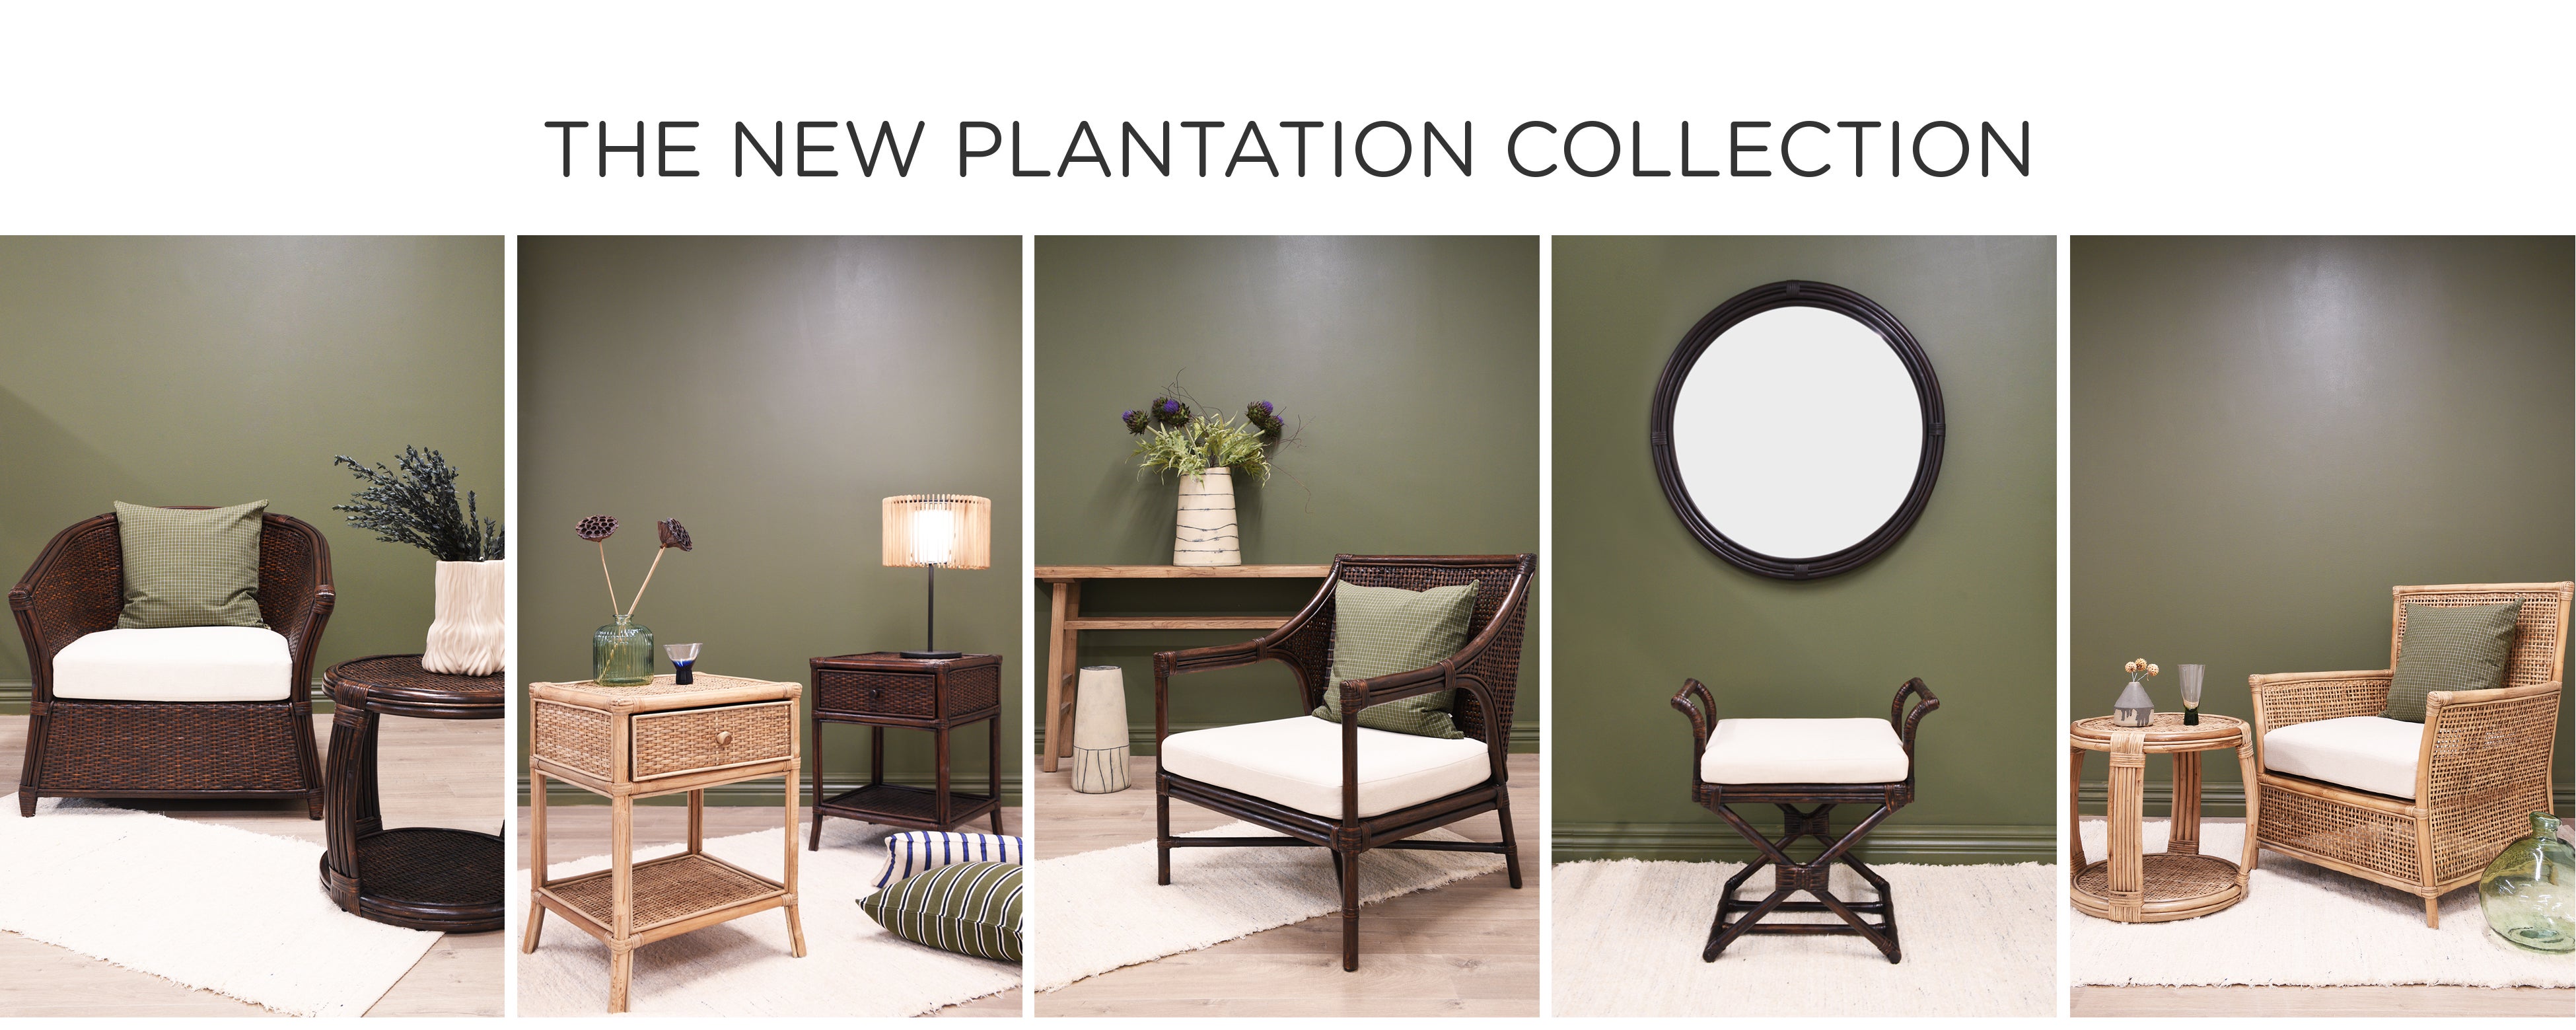 plantation collection